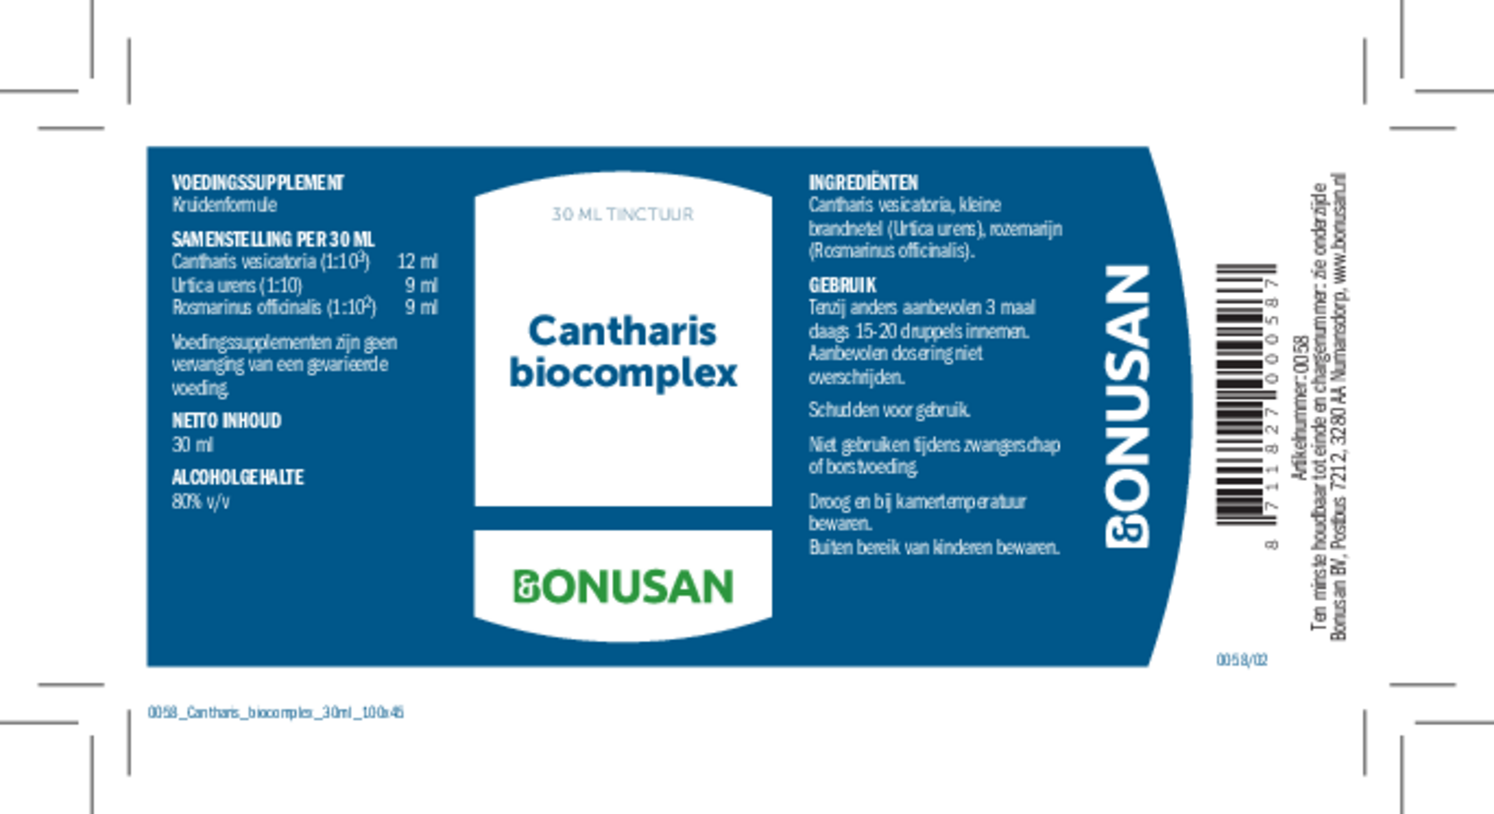 Cantharis Biocomplex afbeelding van document #1, etiket